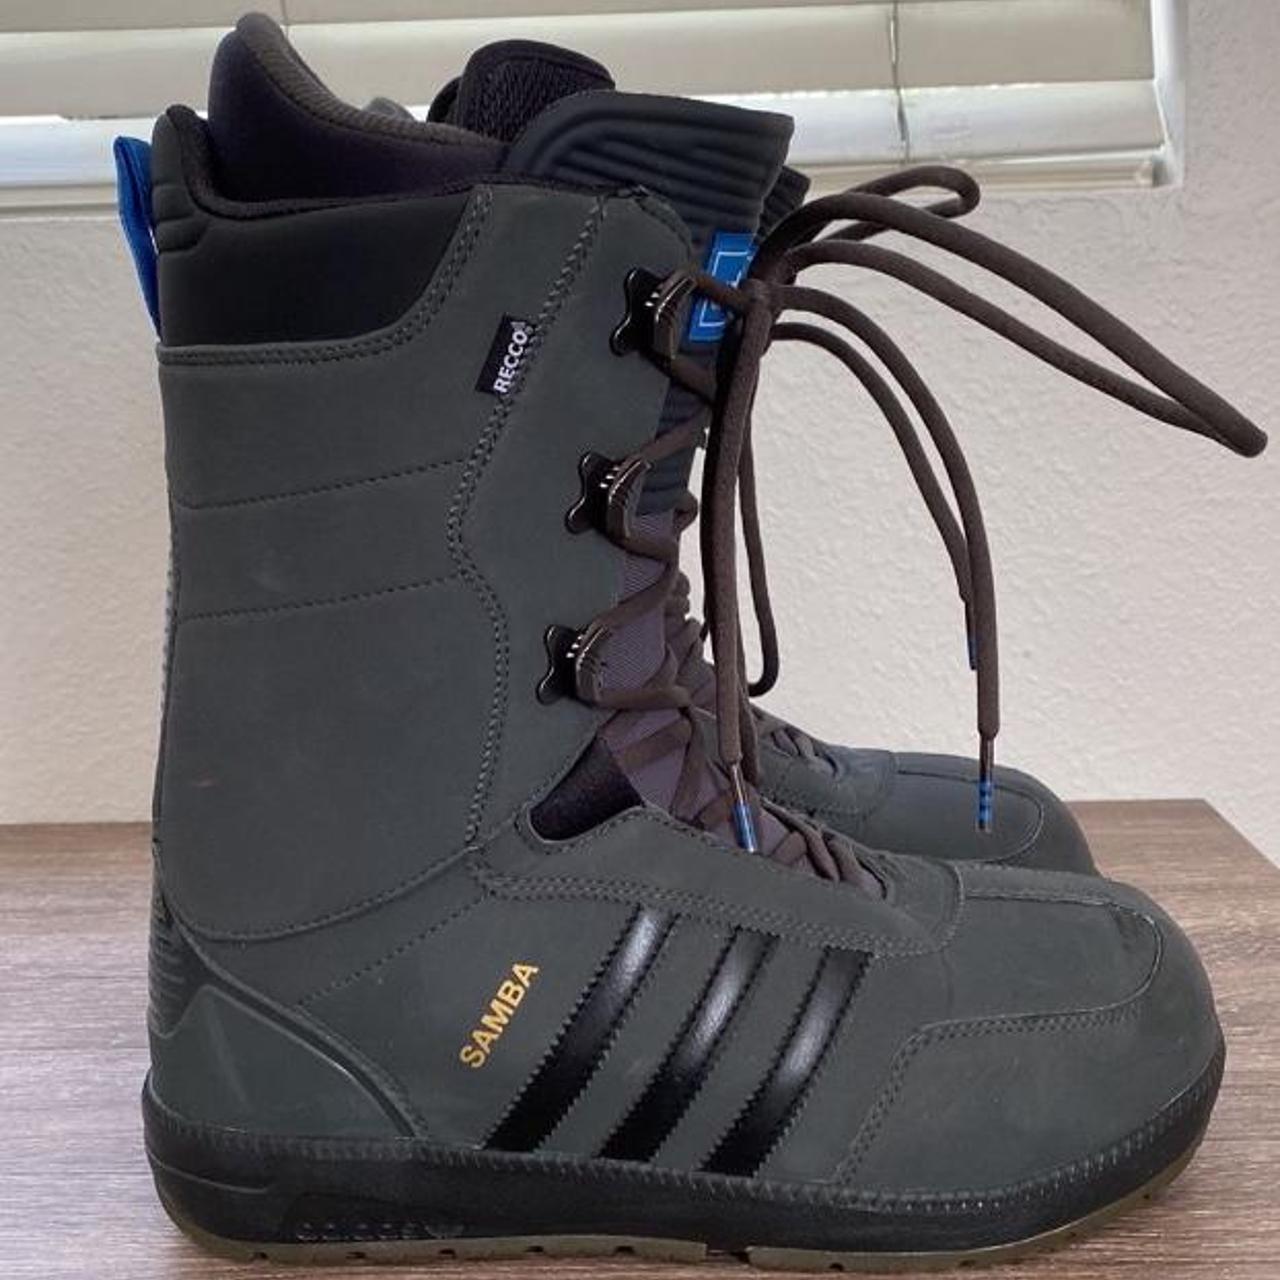 Adidas Men's Boots